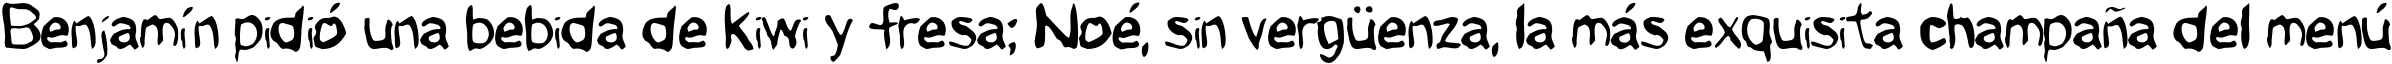 Пример написания шрифтом Gritzpop текста на испанском